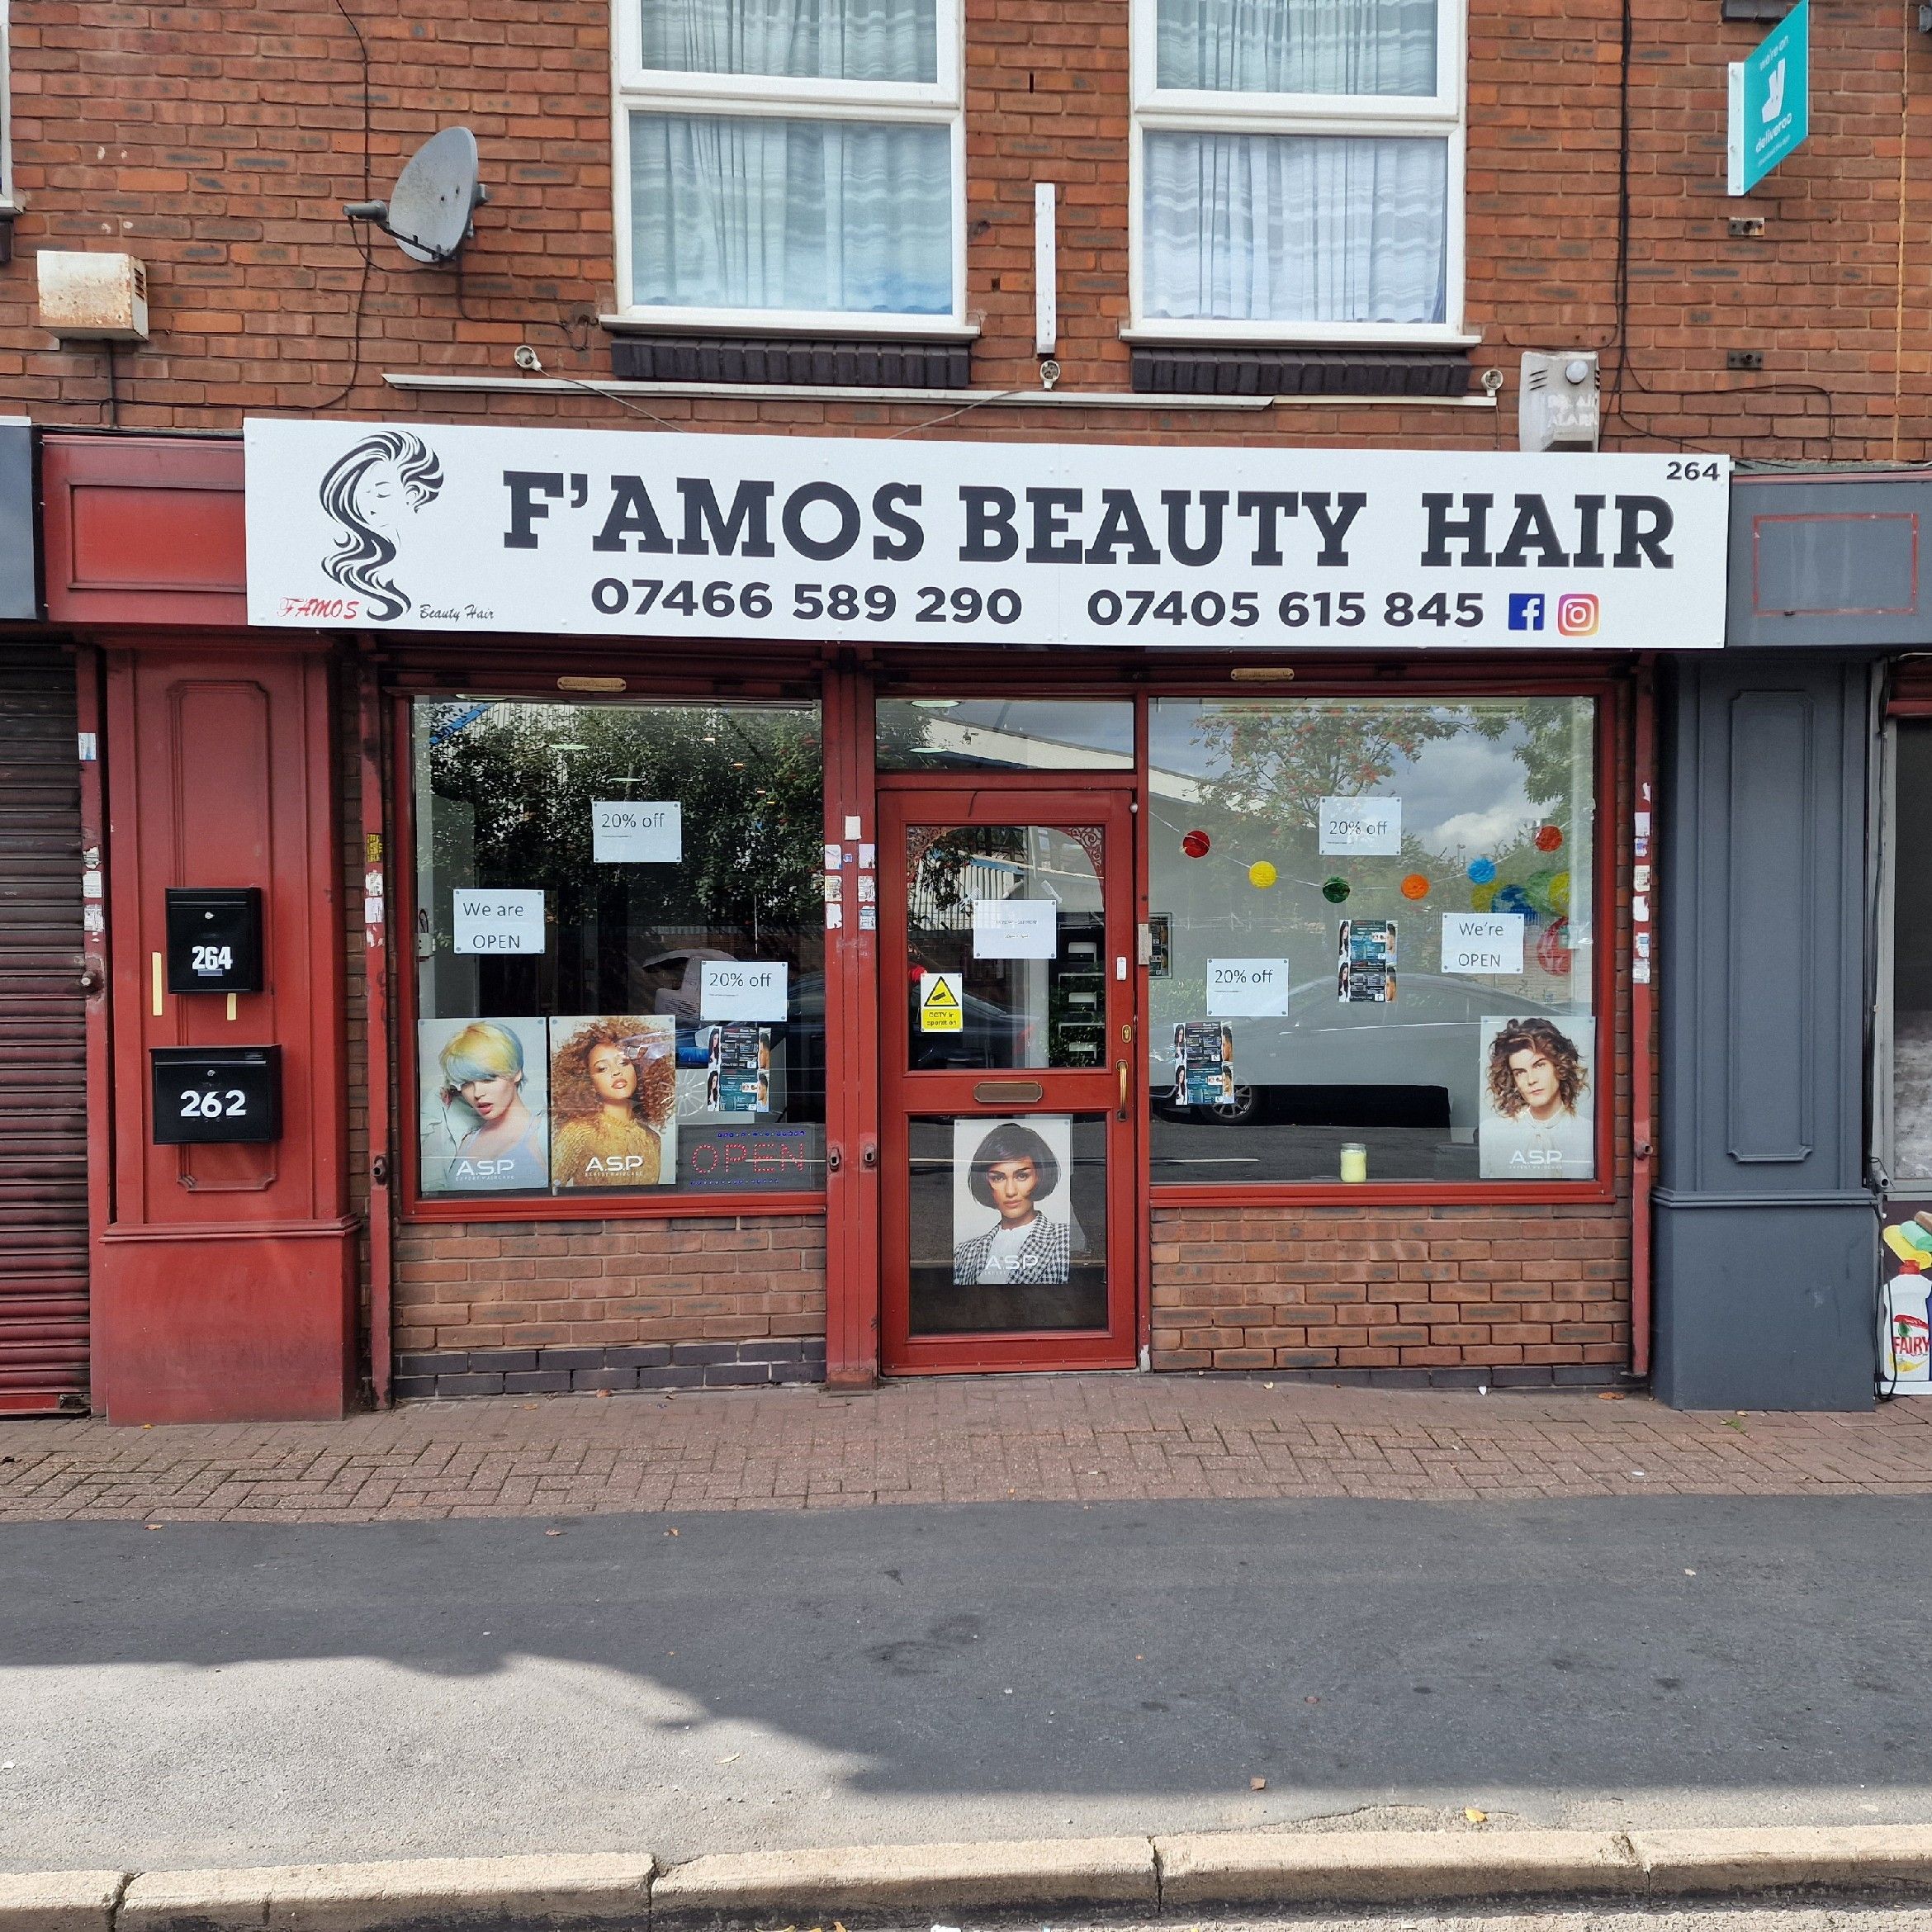 F'Amos Beauty Hair, 264 Whitehall Road, DY4 7EX, Tipton